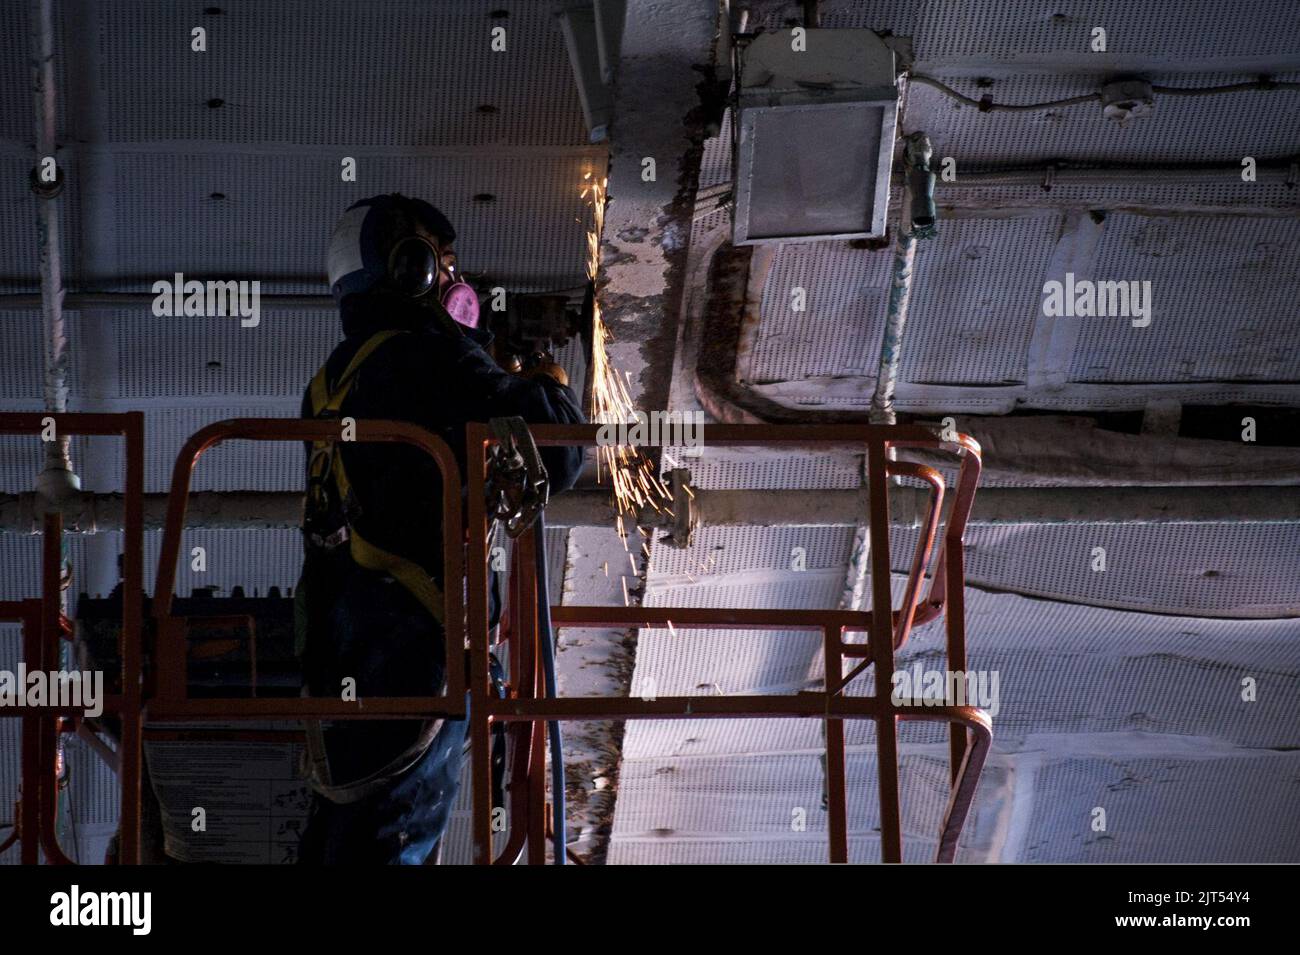 U.S. Navy Aviation Boatswain's Mate Airman grinds paint in the hangar bay of the aircraft carrier USS George Washington (CVN 73) in Yokosuka, Japan, Jan. 19, 2014 140119 Stock Photo